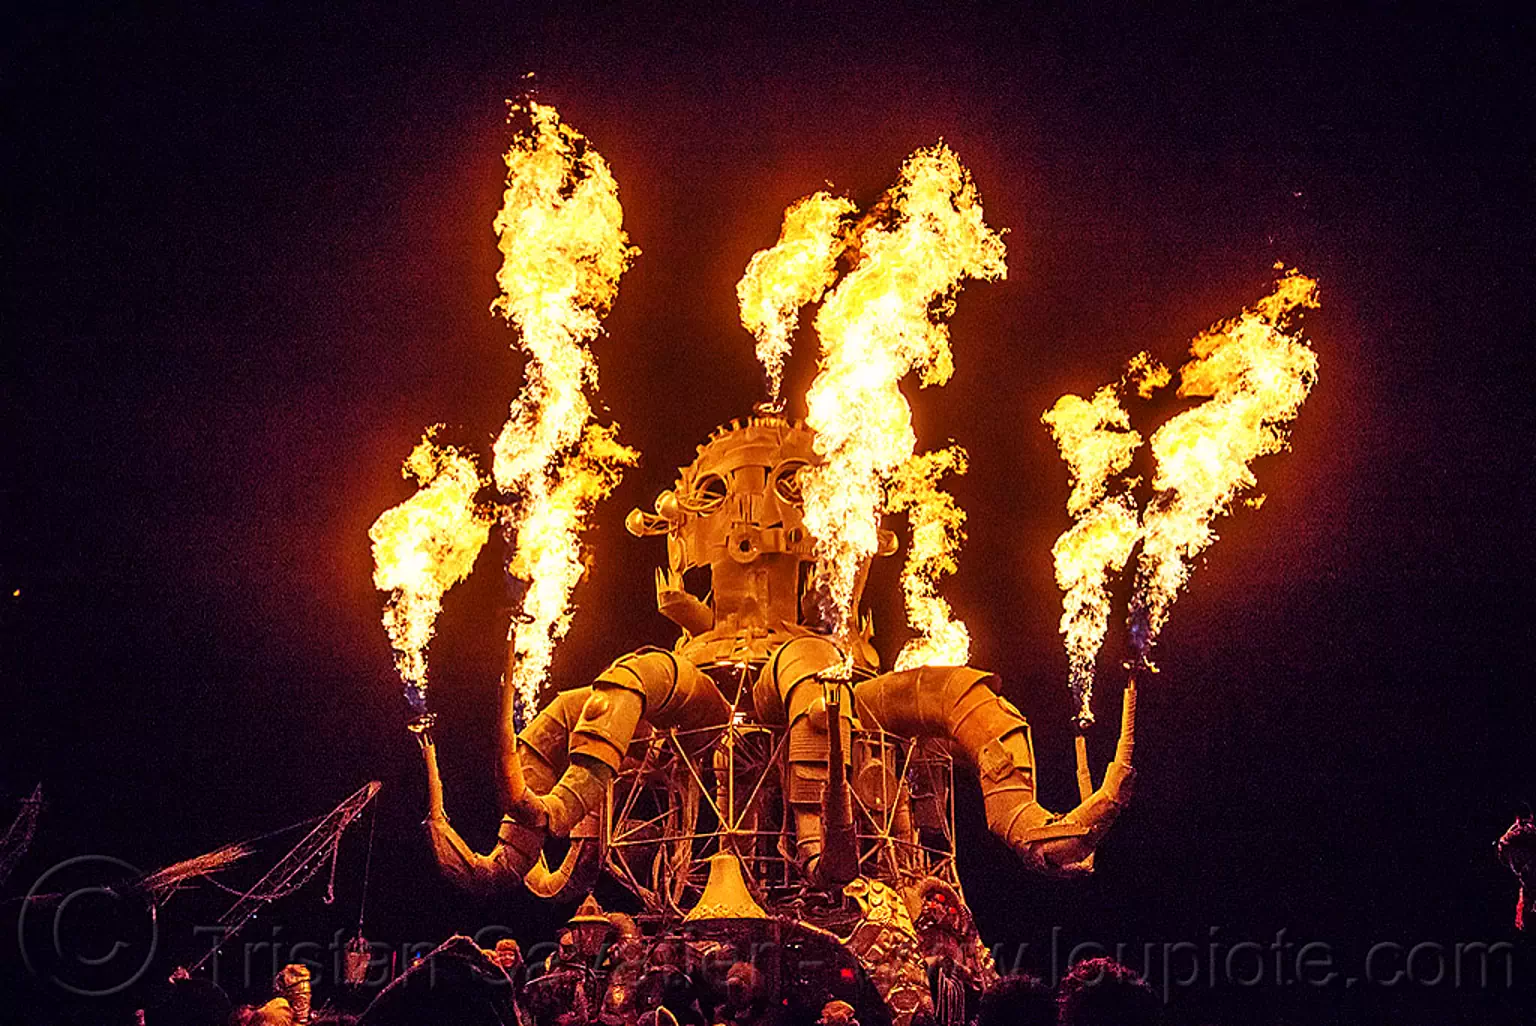 el pulpo mecanico - burning man 2015, burning man, el pulpo mecanico, fire, mutant vehicles, night of the burn, octopus art car, sculpture, steampunk octopus